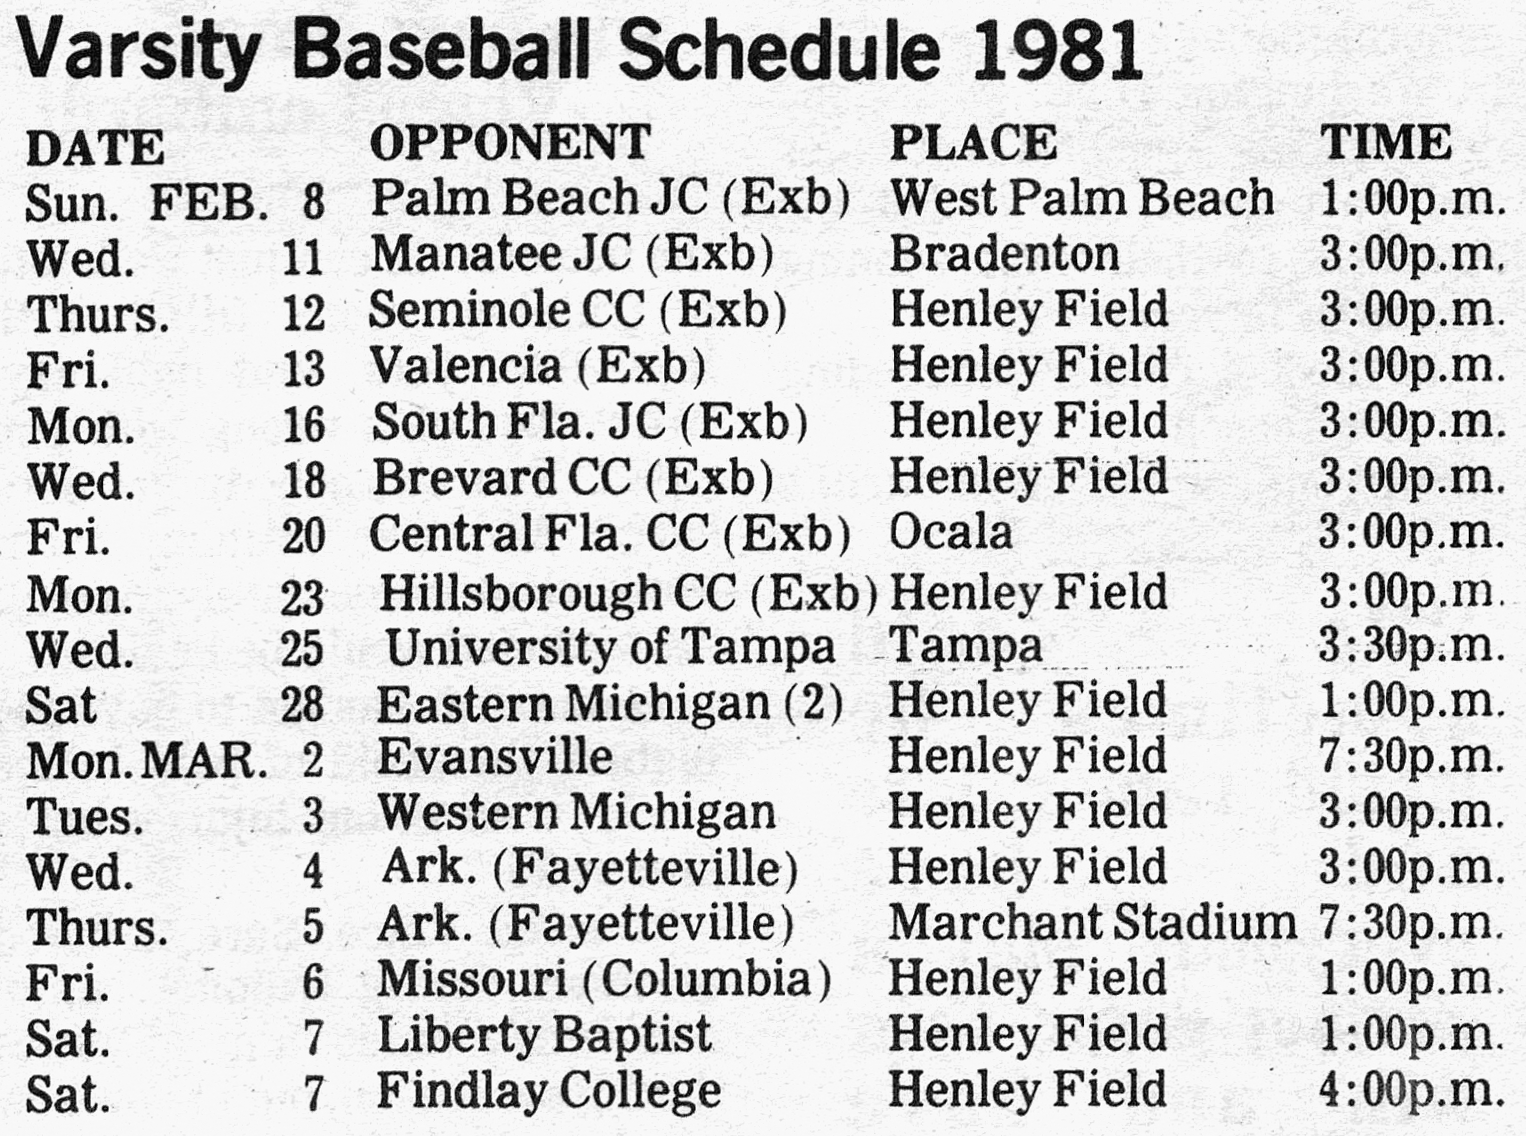 Varsity Baseball Schedule 1981 Date Opponent Place Time Sunday Feb. 8 Palm Beach JC (Exb) West Palm Beach 1:00p.m. Wed. 11 Manatee JC (Exb) Bradenton 3:00p.m. Thurs. 12 Seminole CC (Exb) Henley Field 3:00p.m. Fri. 13 Valencia (Exb) Henley Field 3:00p.m. Mon. 16 South Fla. JC (Exb) Henley Field 3:00p.m Wed. 18 Brevard CC (Exb) Henley Field 3:00p.m Fri. 20 Central Fla. CC (Exb) Ocala 3:00p.m. Mon. 23 Hillsborough CC (Exb) Henley Field 3:00p.m. Wed. 25 University of Tampa Tampa 3:30p.m. Sat. 28 Eastern Michigan (2) Henley Field 1:00p.m. Mon. Mar. 2 Evansville Henley Field 7:30p.m. Tues. 3 Western Michigan Henley Field 3:00p.m. Wed. 4 Ark. (Fayetteville) Henley Field 3:00p.m Thurs. 5 Ark. (Fayetteville) Marchant Stadium 7:30p.m. Fri. 6 Missouri (Columbia) Henley Field 1:00p.m. Sat. 7 Liberty Baptist Henley Field 1:00p.m. Sat. 7 Findlay College Henley Field 4:00p.m.